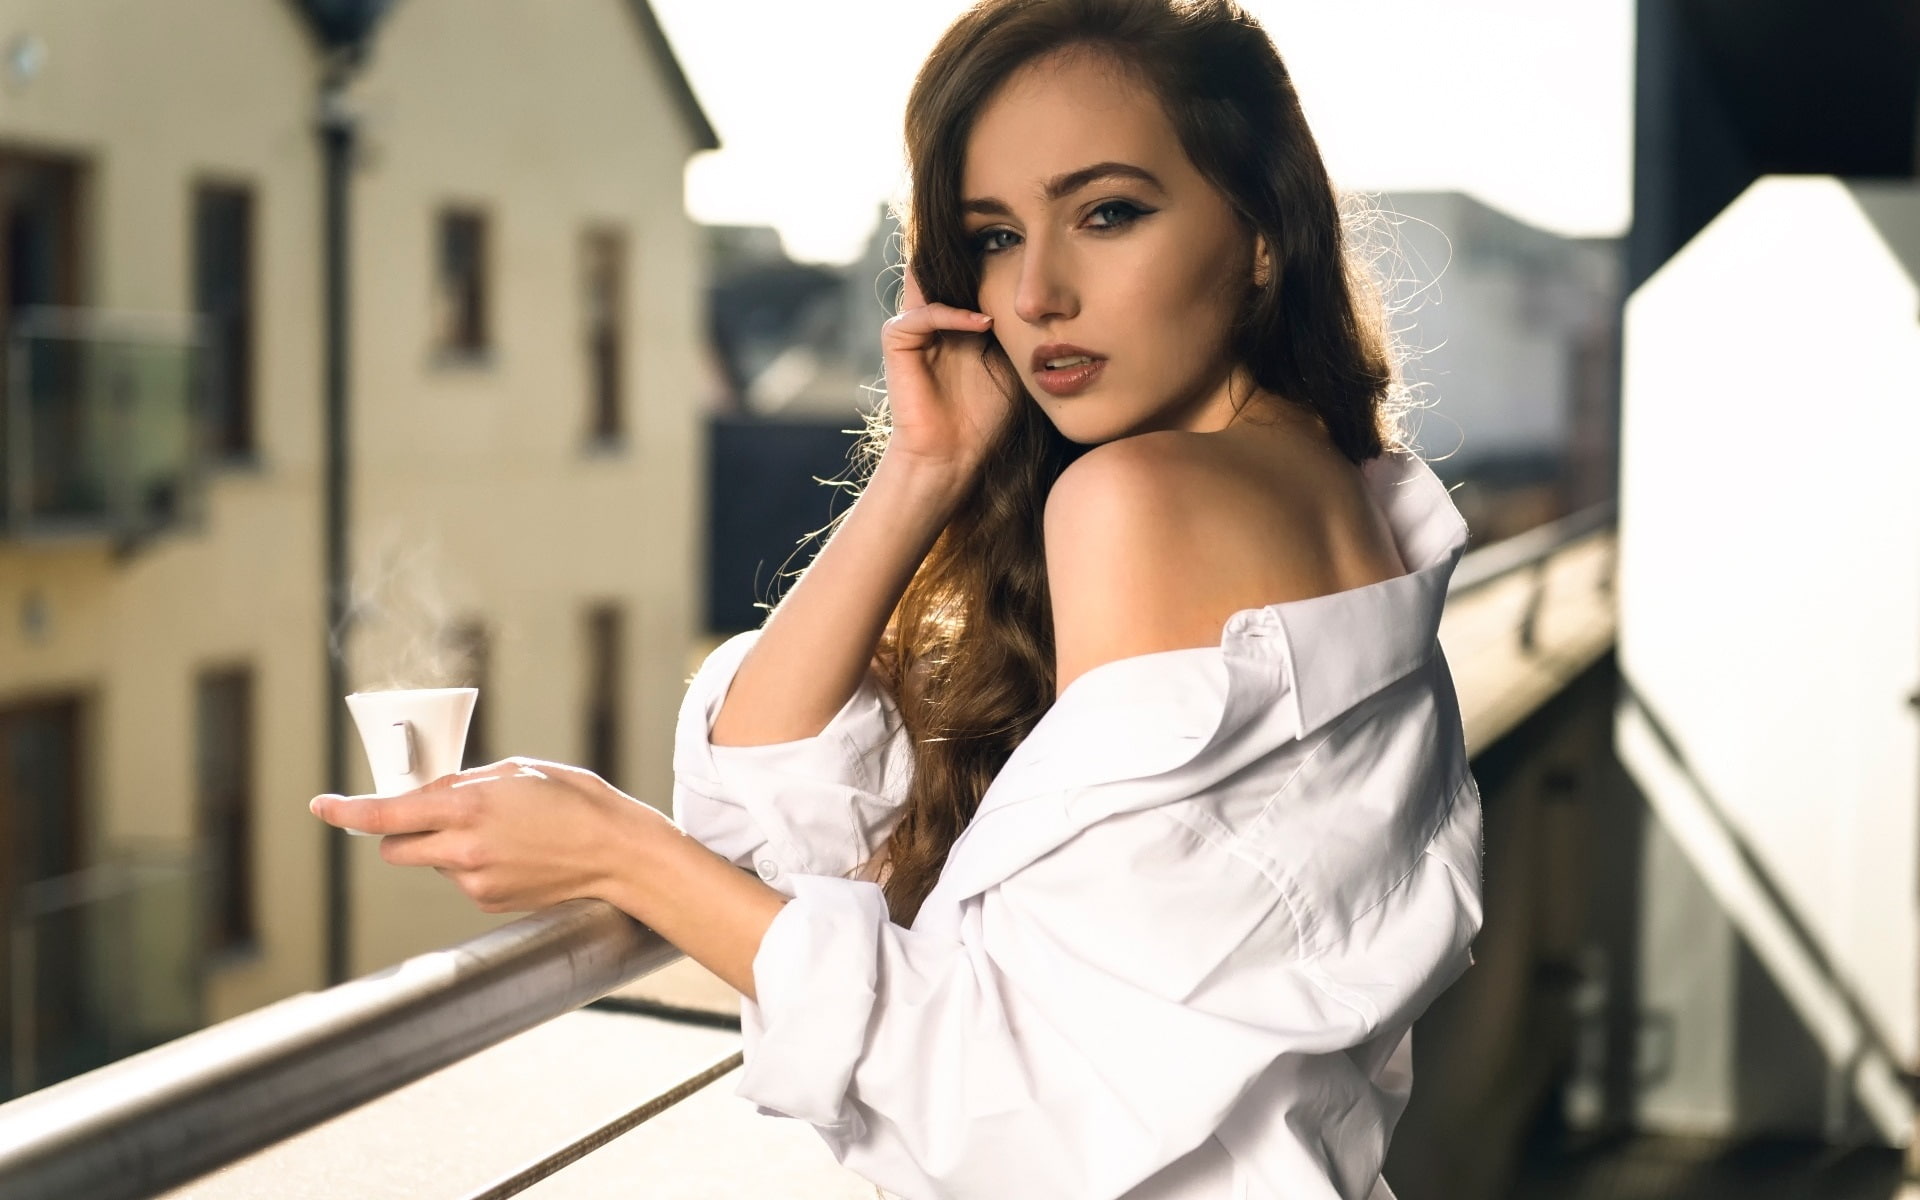 White shirt girl, coffee cup